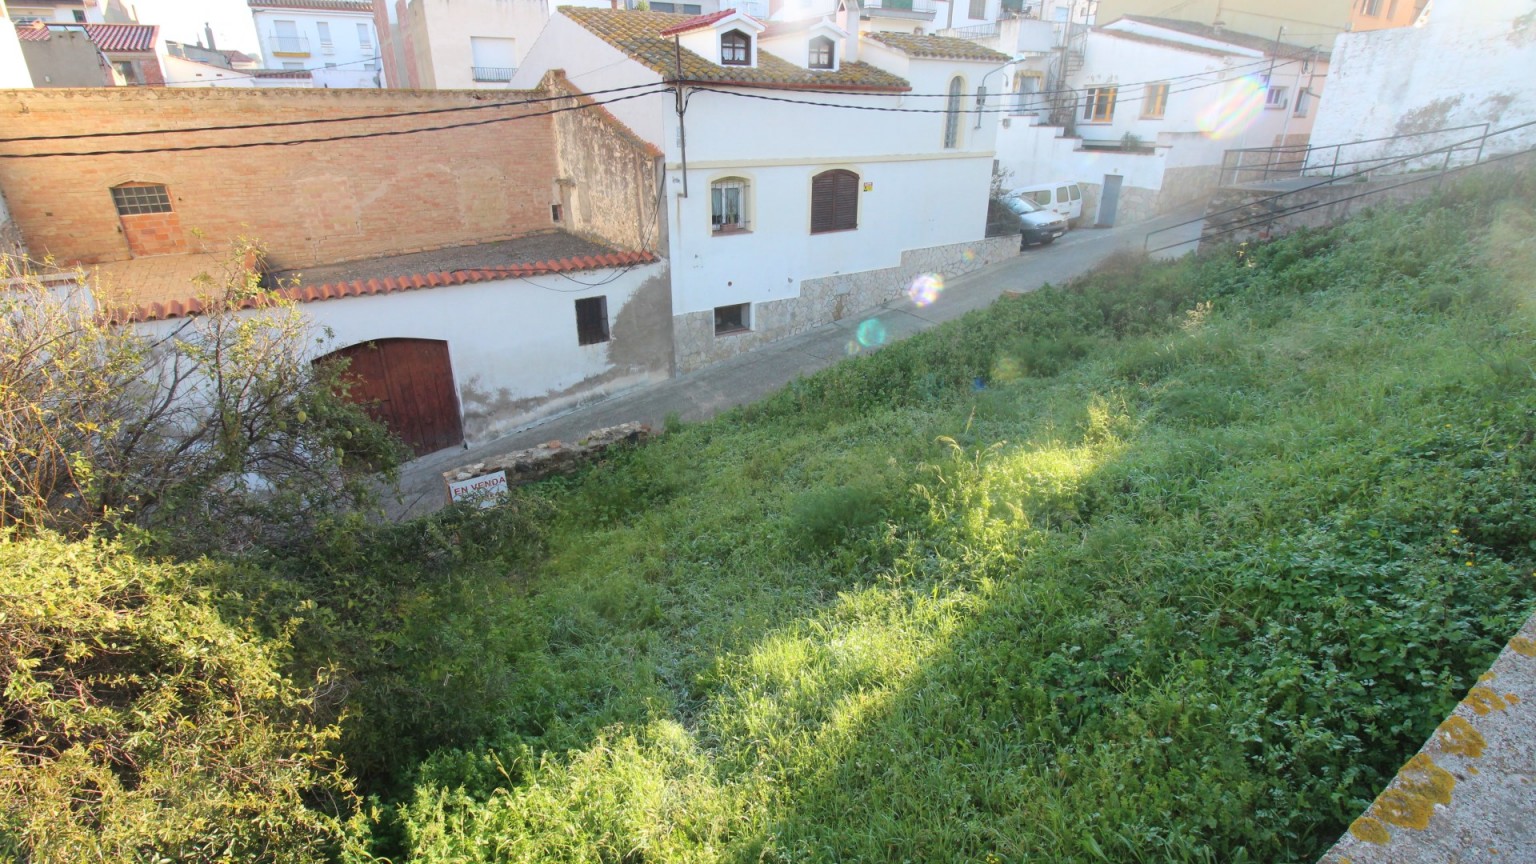 Plot of land for sale at the center of La Vila